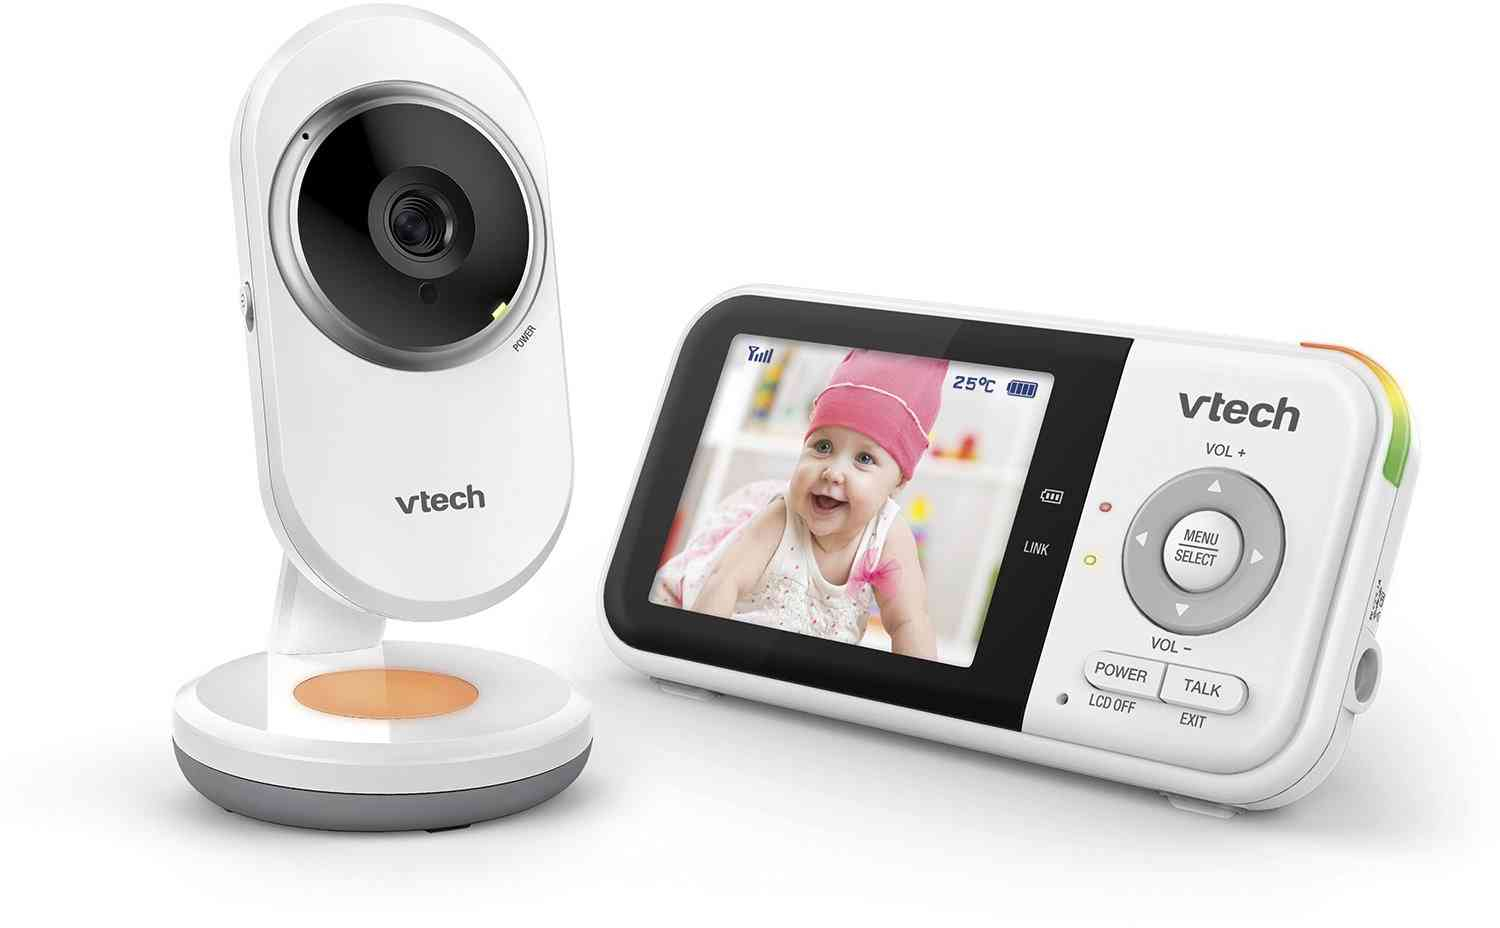 VTECH VM3254, Kinder Videobabyphone mit Farbdisplay 2,8"